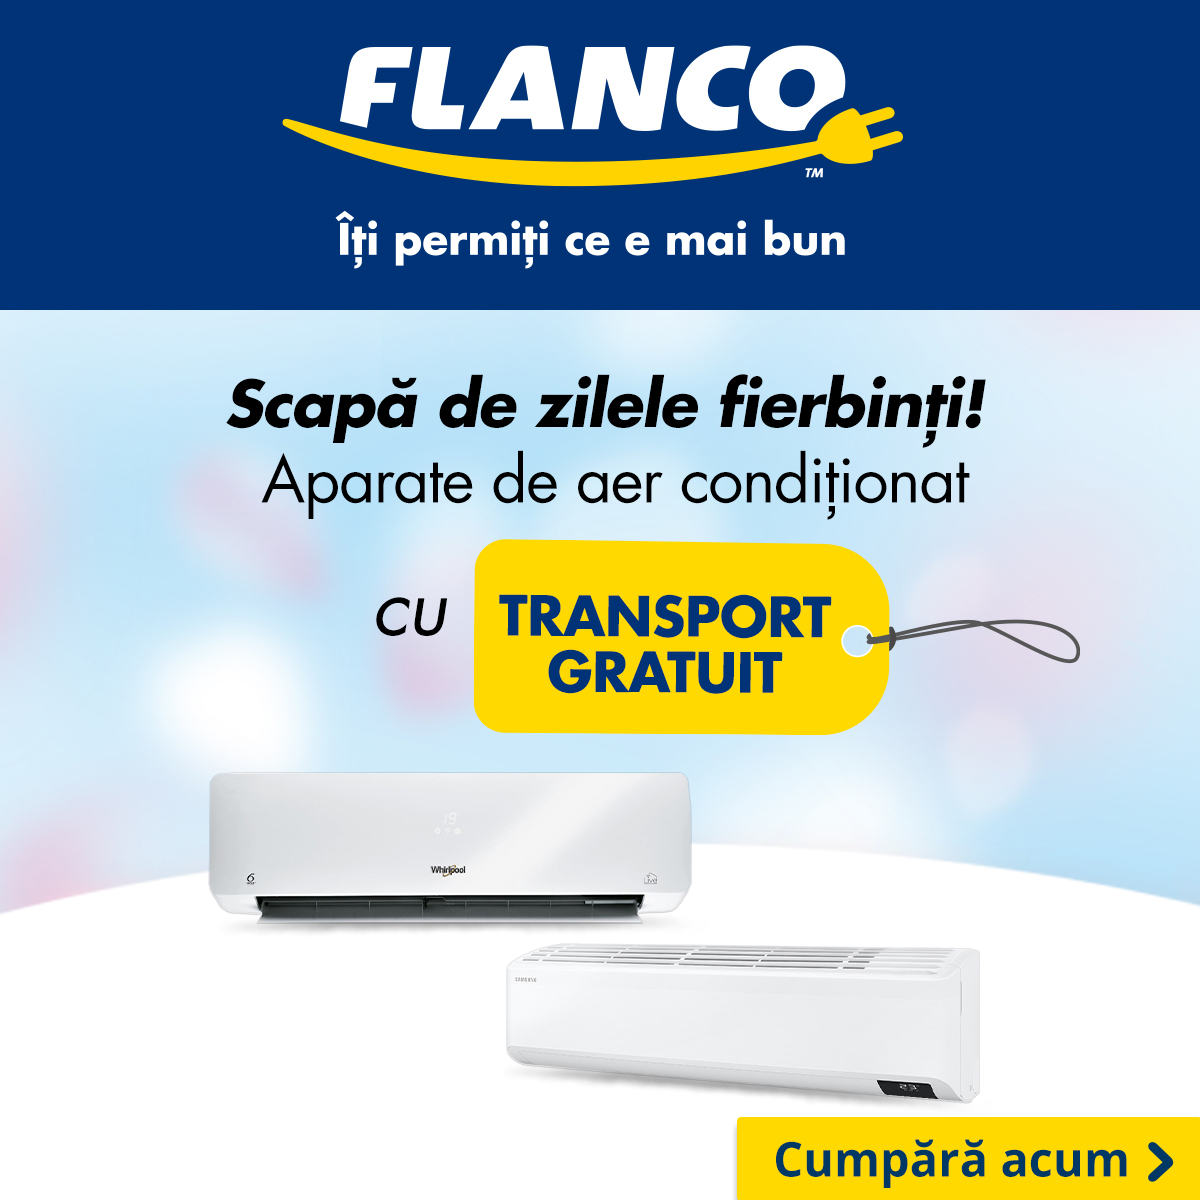 Flanco - In Black Friday ai transport gratuit la Aparate de aer conditionat